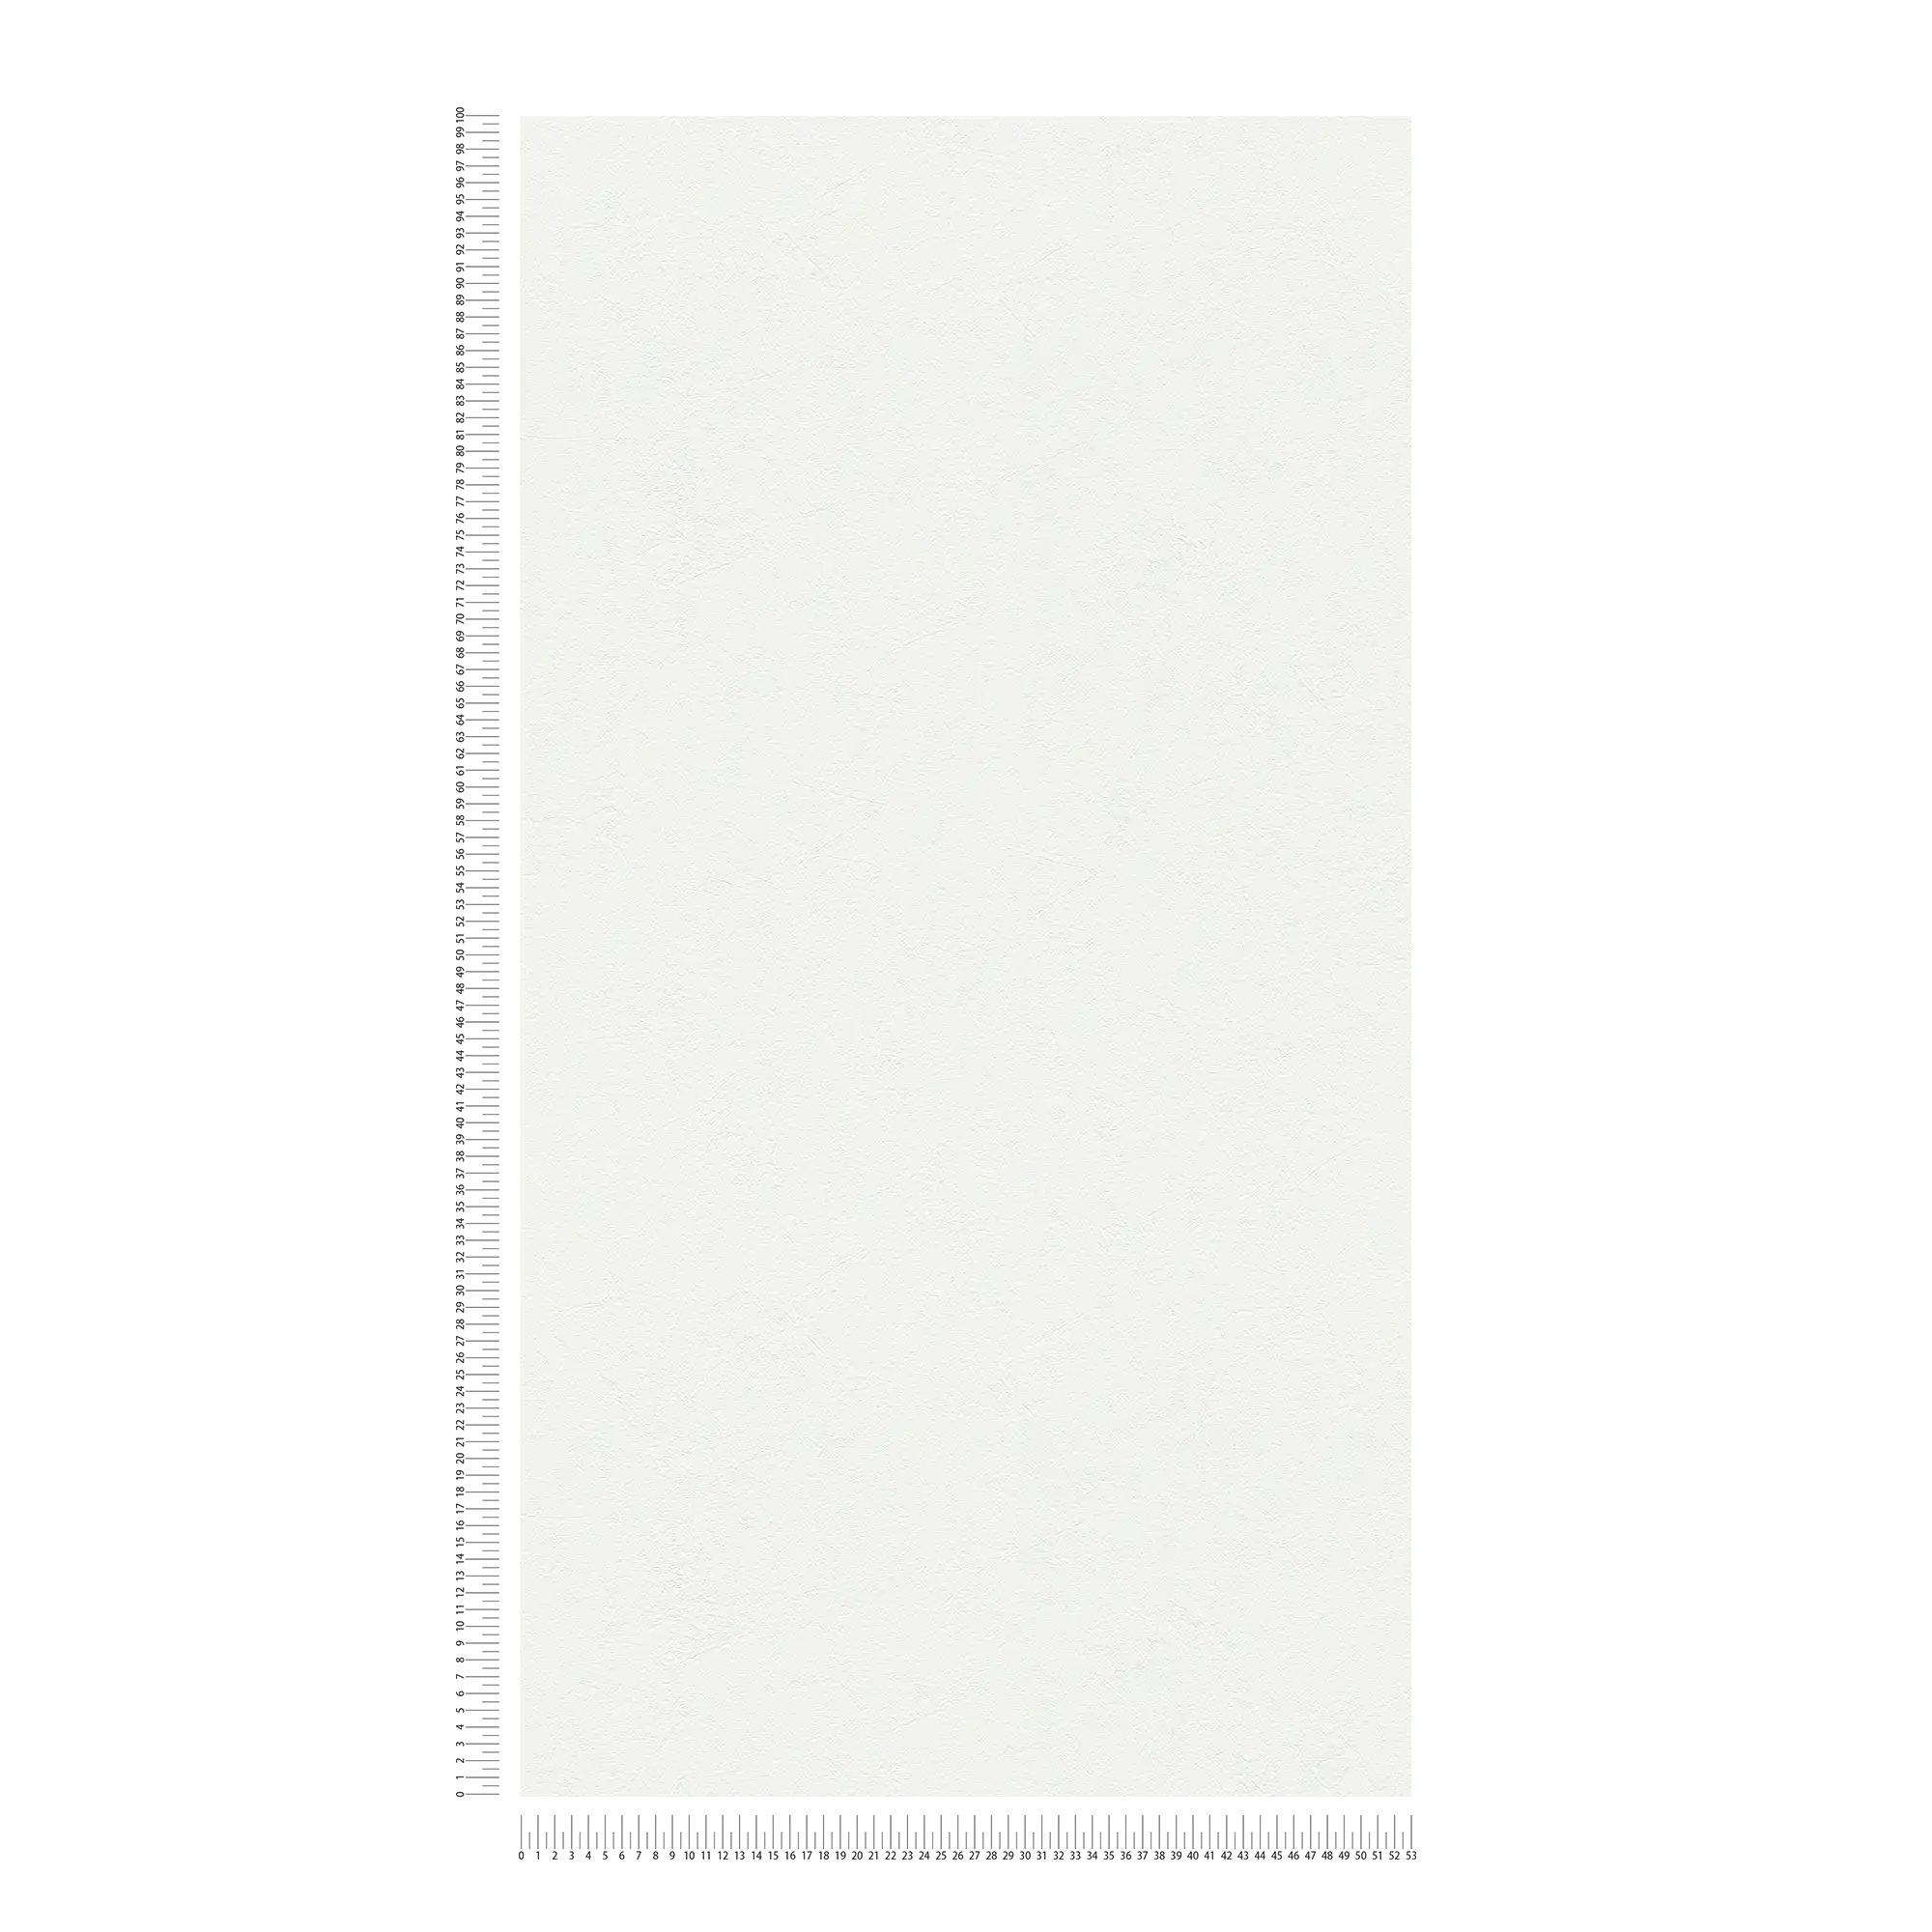             Plain wallpaper white, matte finish for neutral walls
        